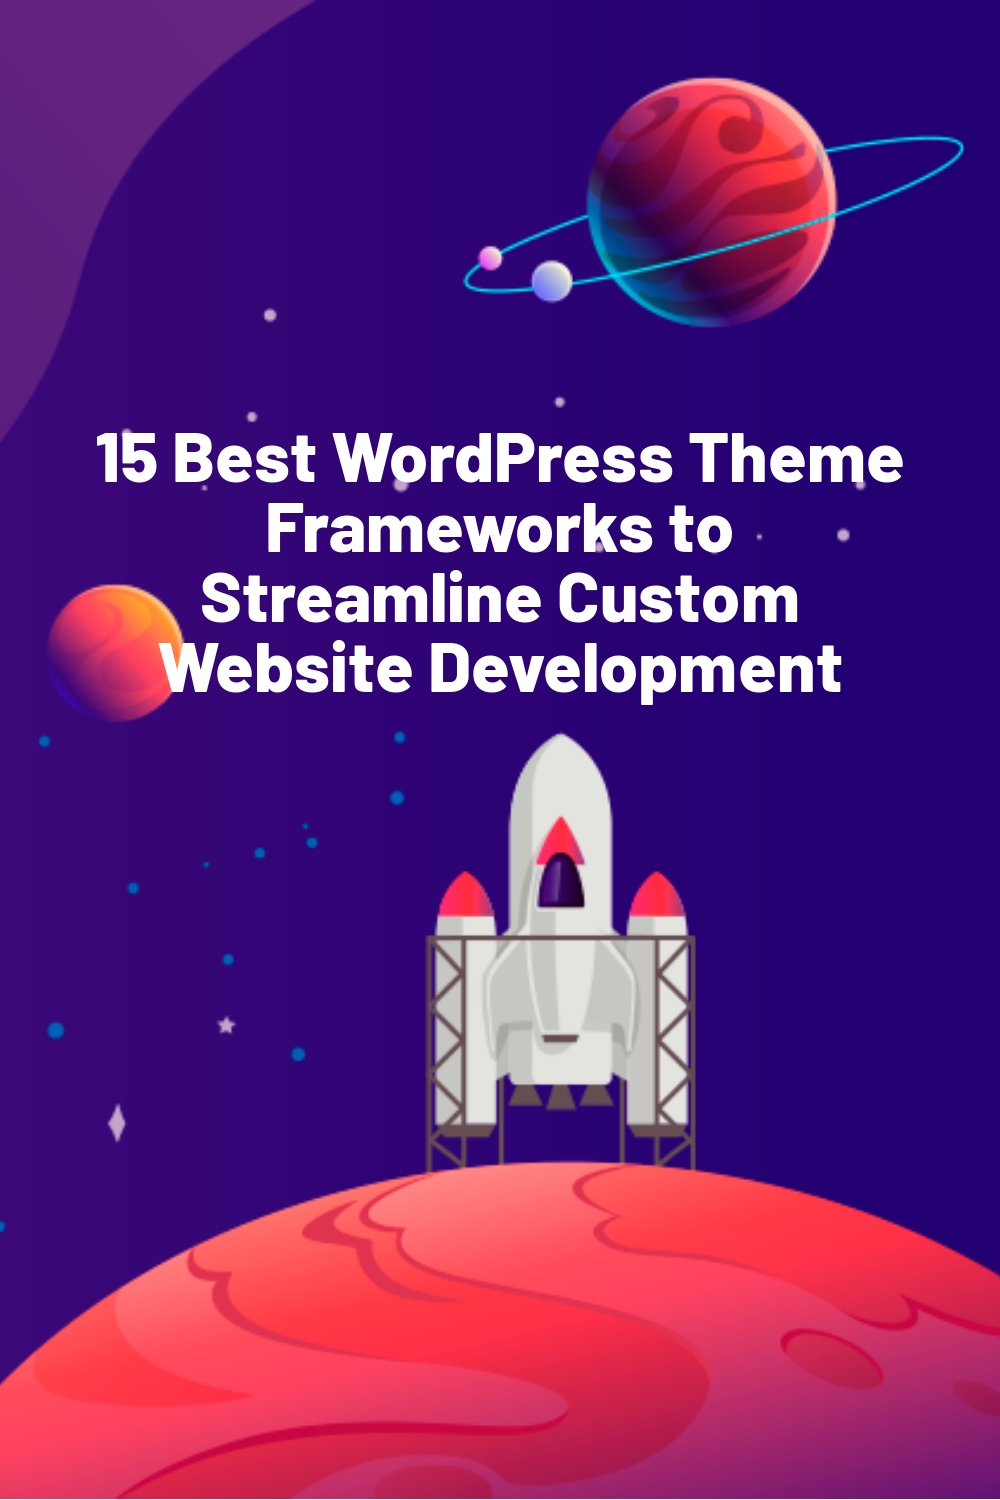 15 Best WordPress Theme Frameworks to Streamline Custom Website Development